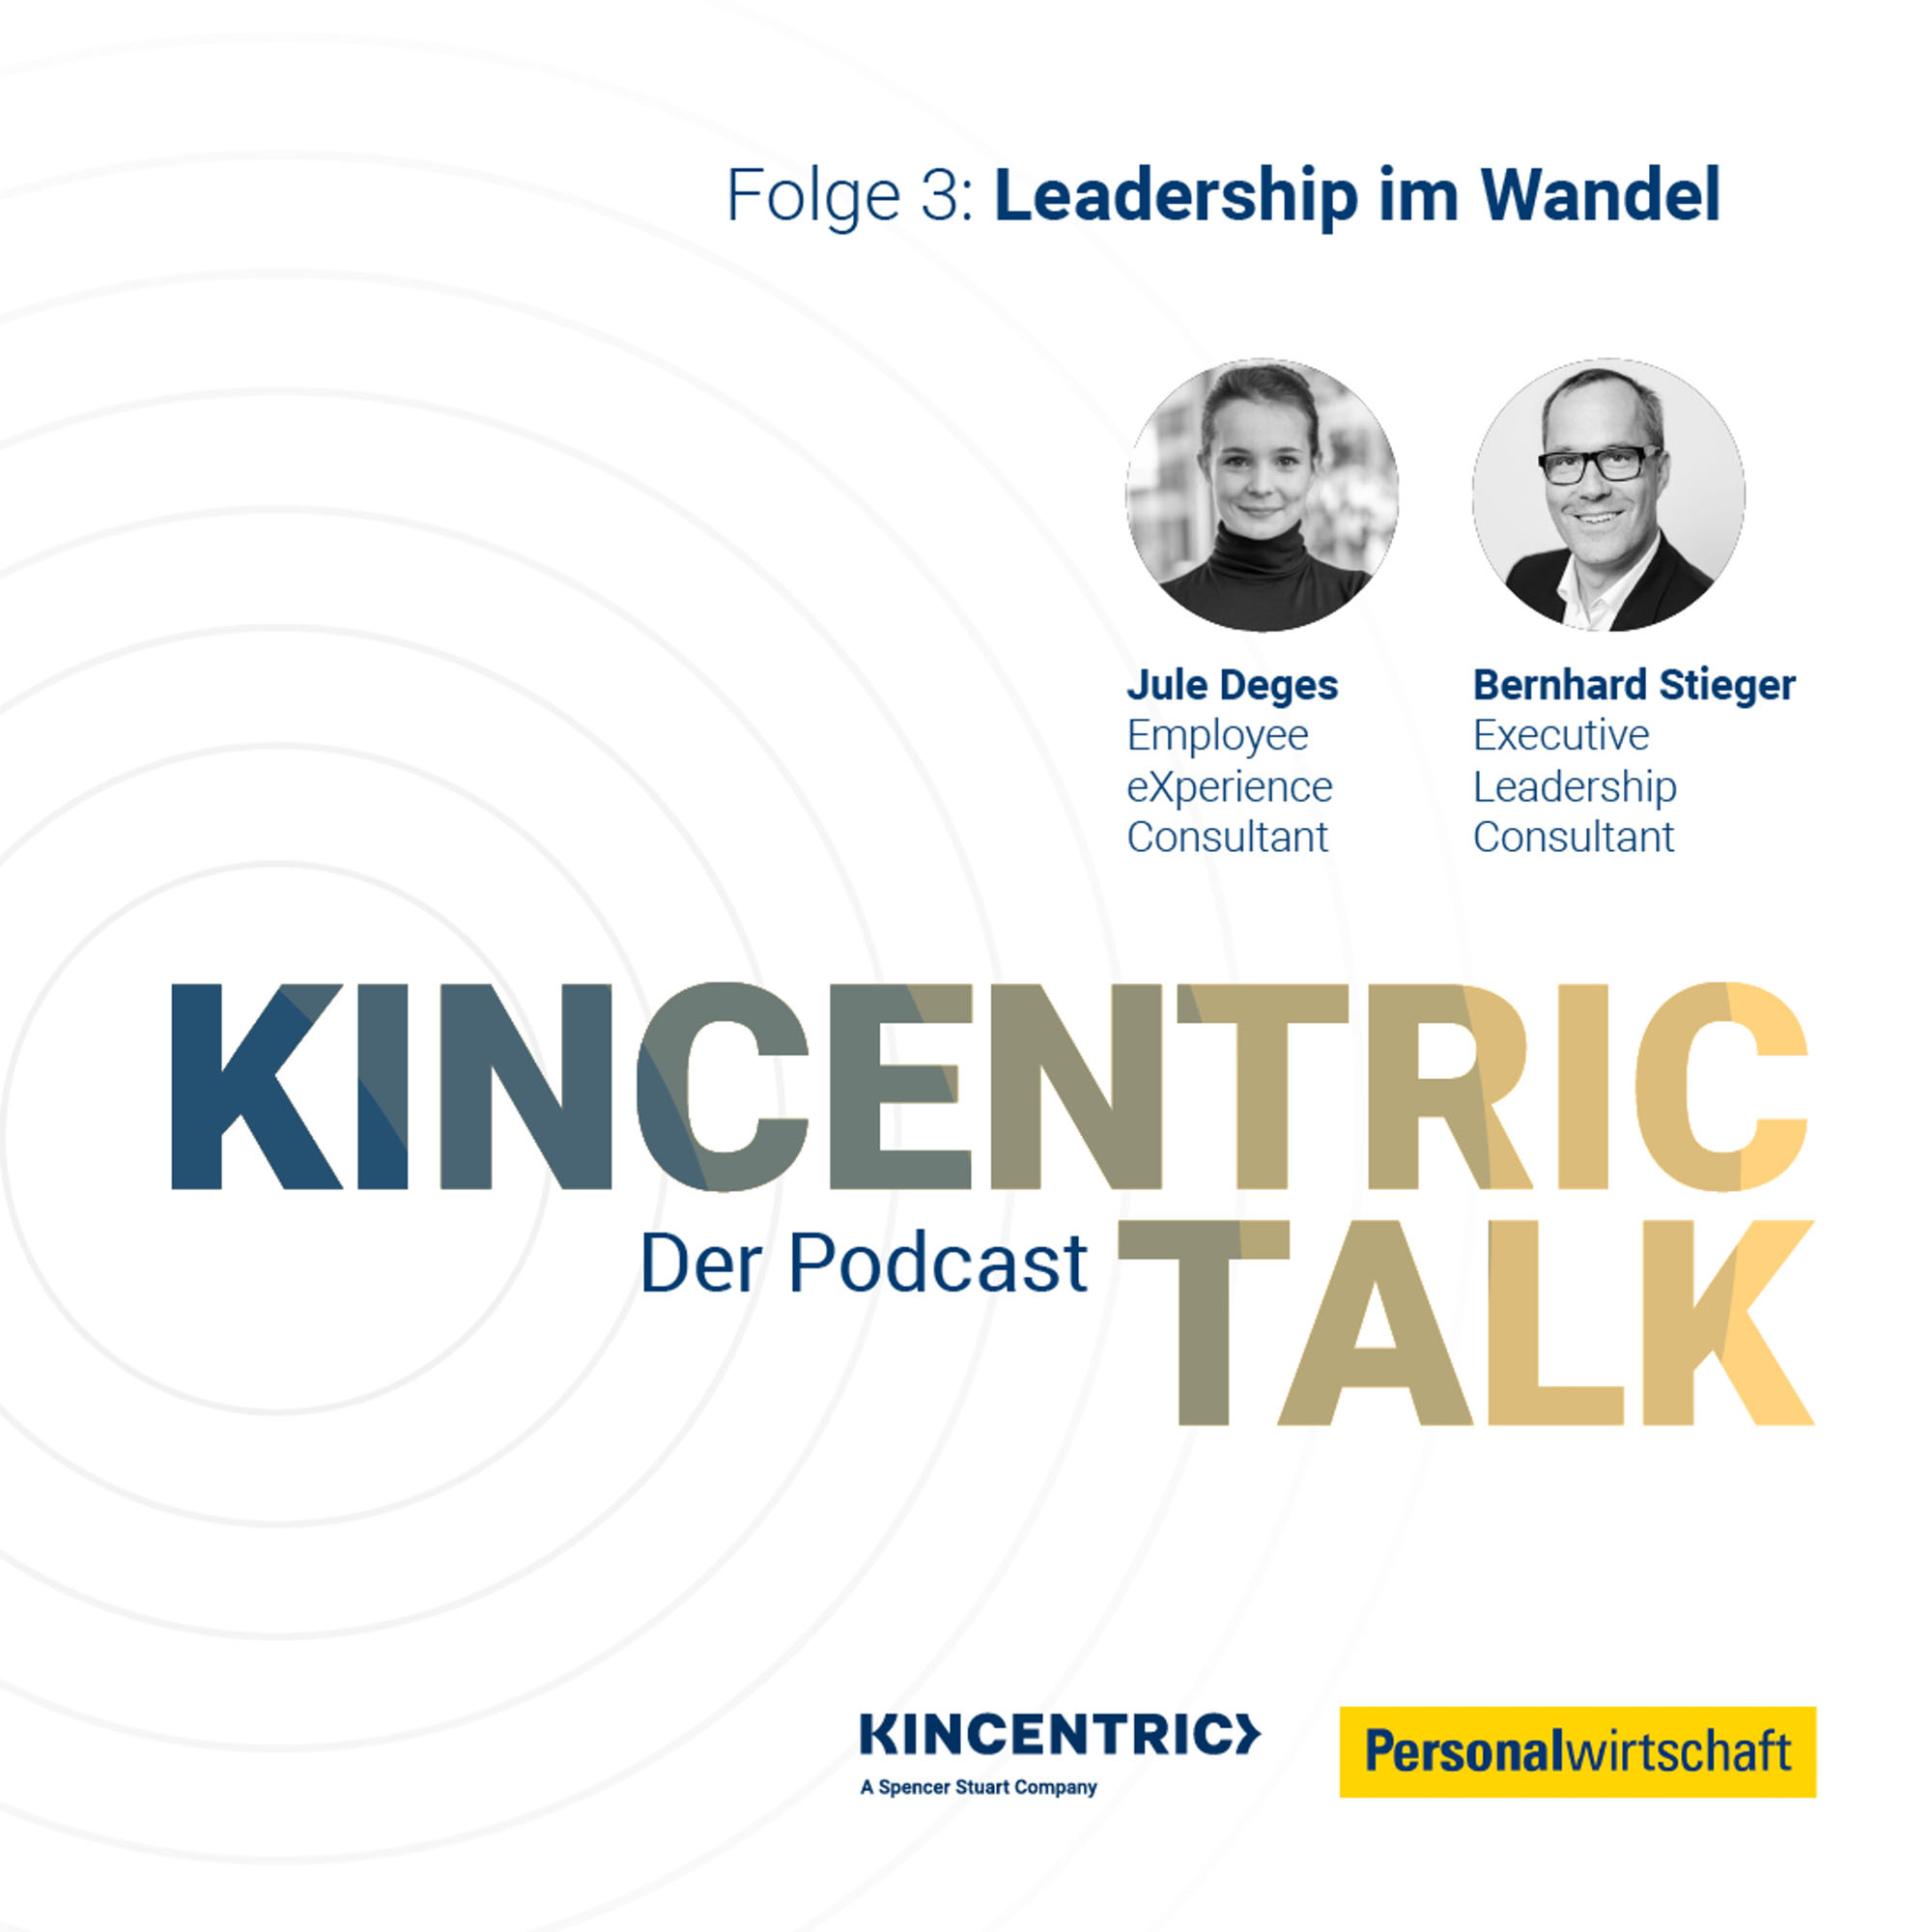 Kincentric-Talk # 3: Leadership im Wandel